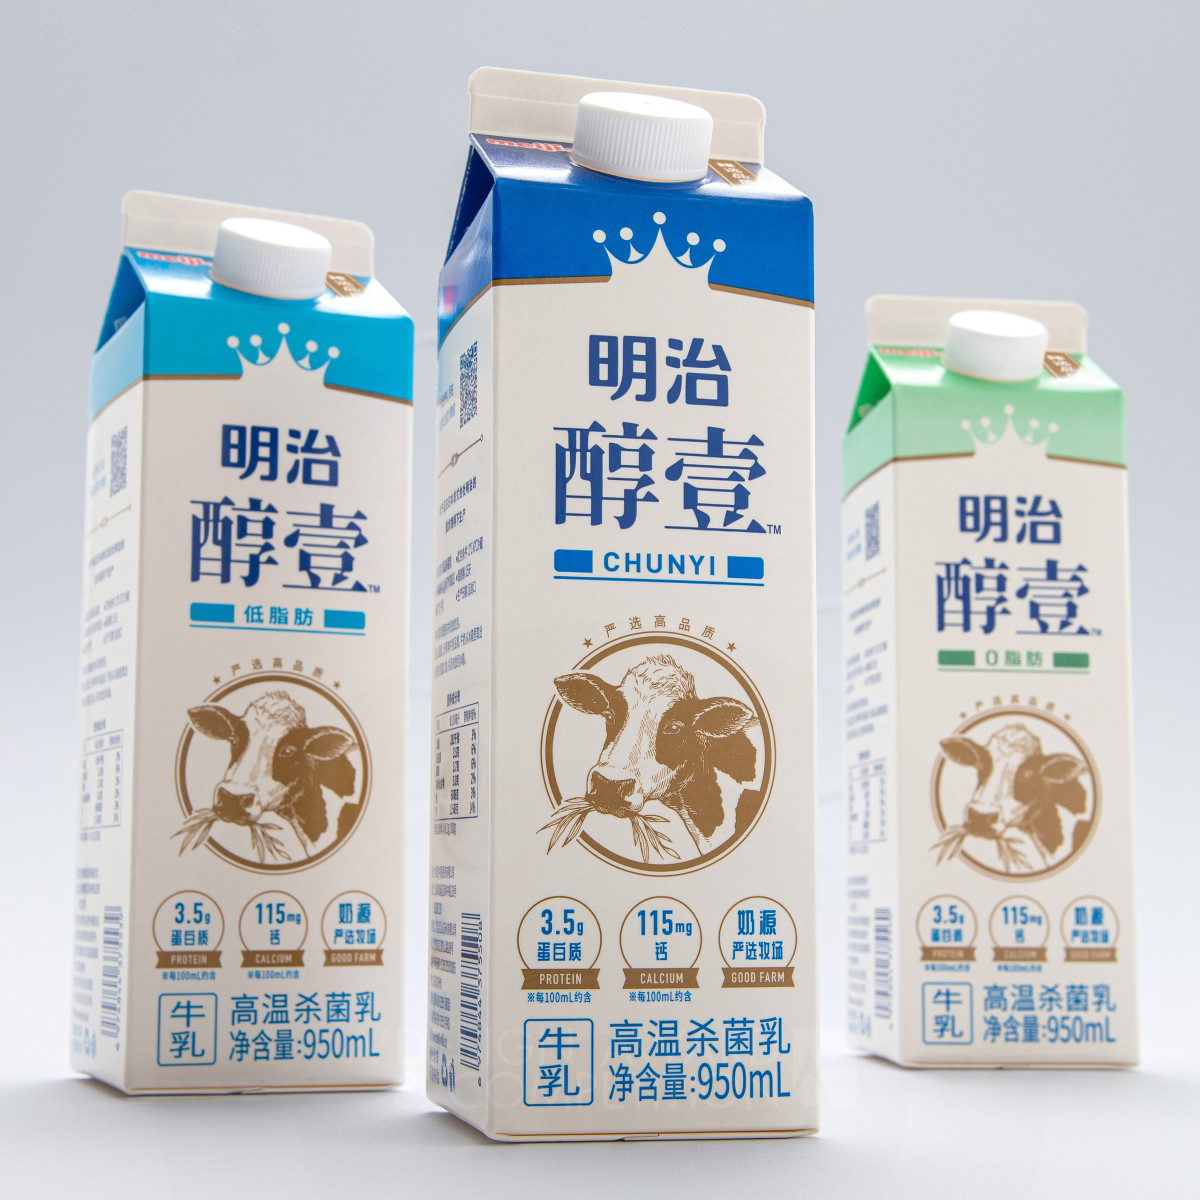 Chilled Milk Carton by Kazuo Fukushima